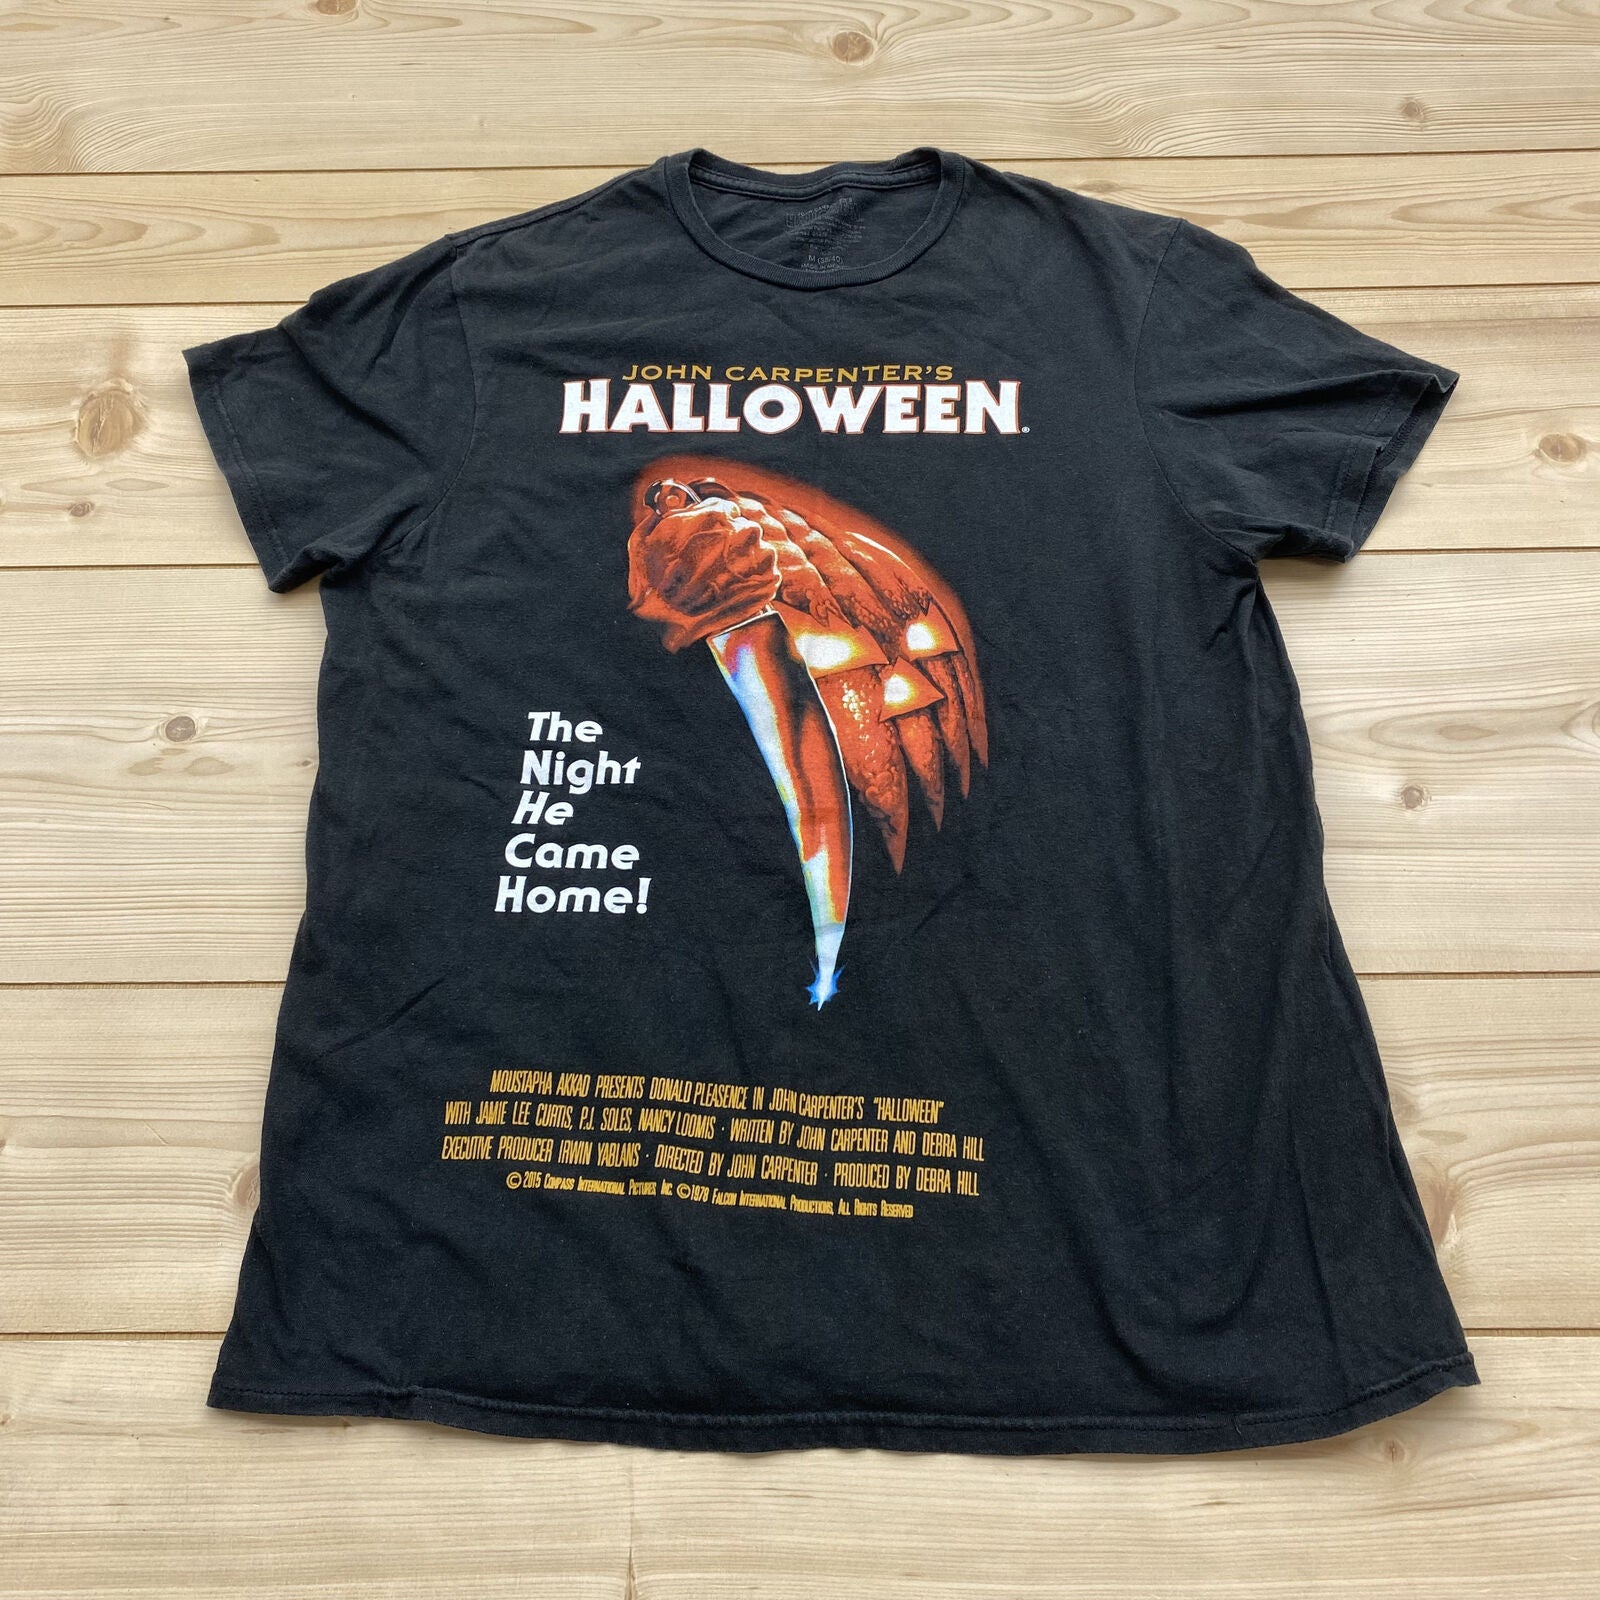 John Carpenters Halloween Black Horror Movie Short Sleeve T-Shirt Adult Size M